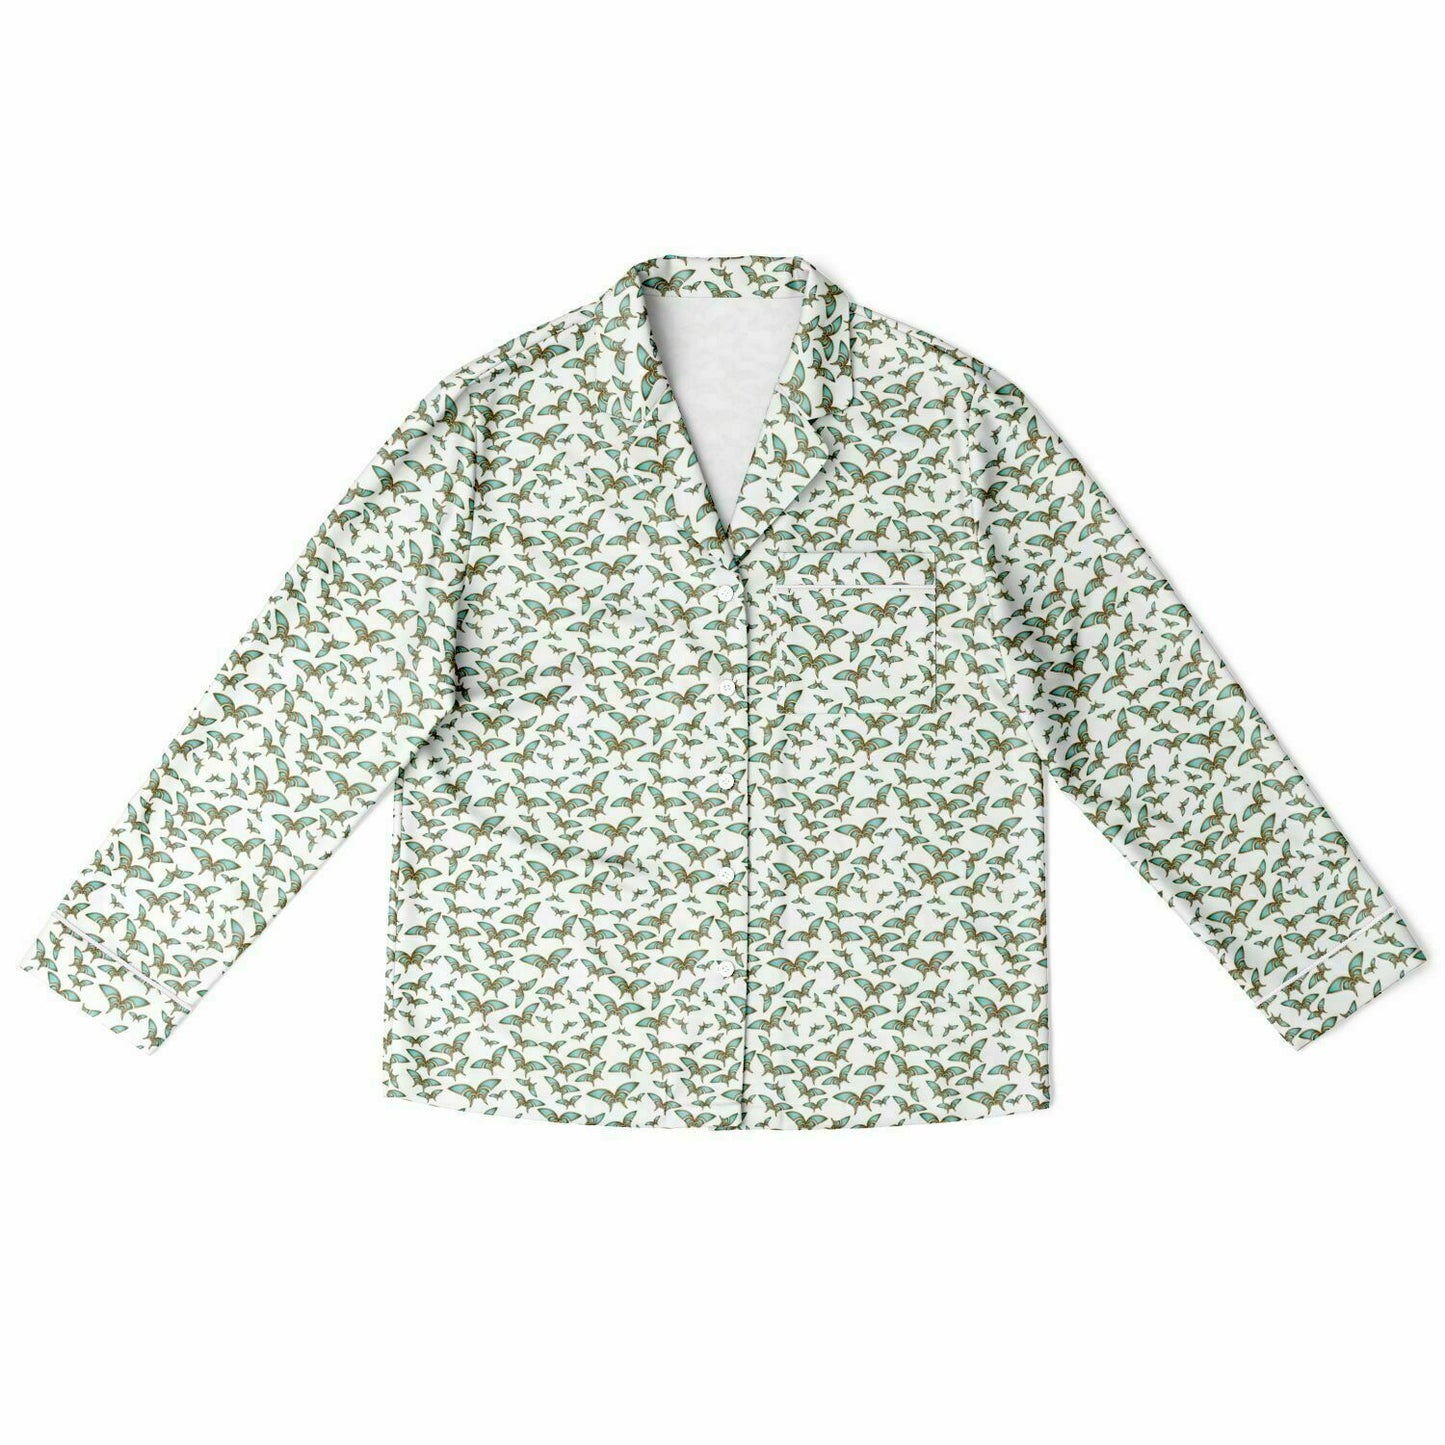 Women's Satin Pajamas - AOP Kukloso Madam Butterfly No 1 Aqua & Gold colors on White - Free Shipping